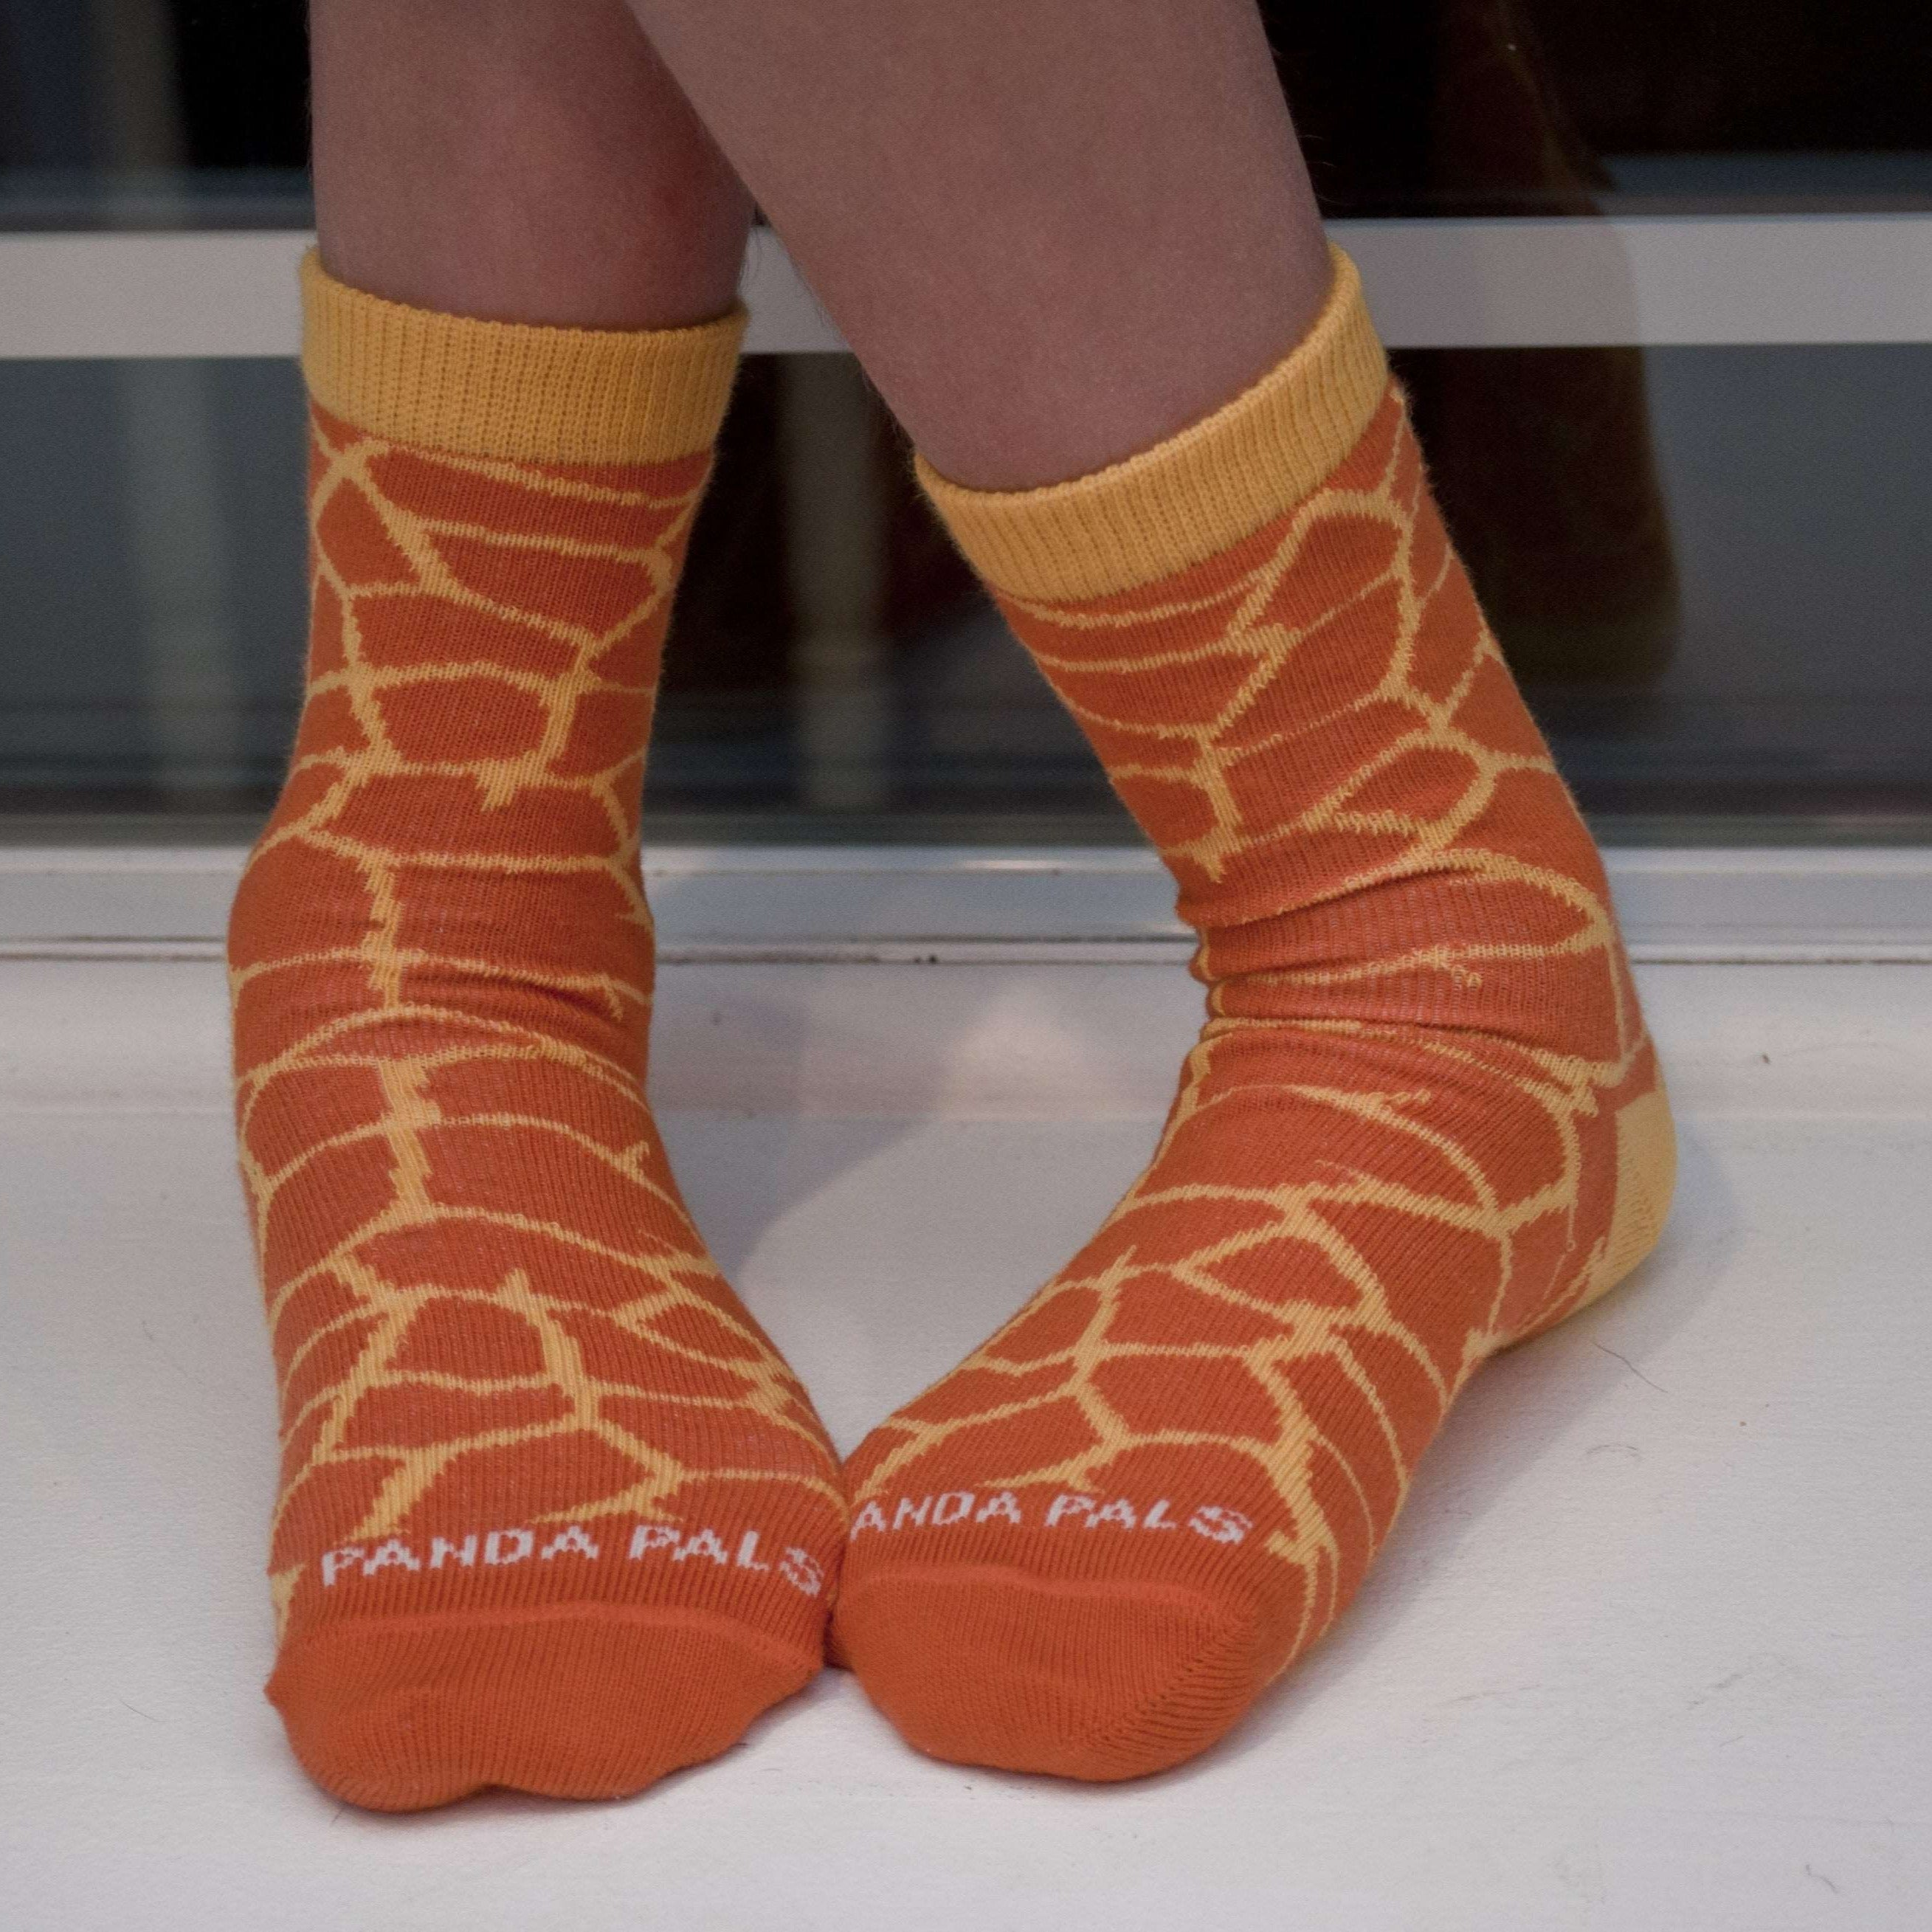 Giraffe Patterns Socks (Ages 3-7) from the Sock Panda